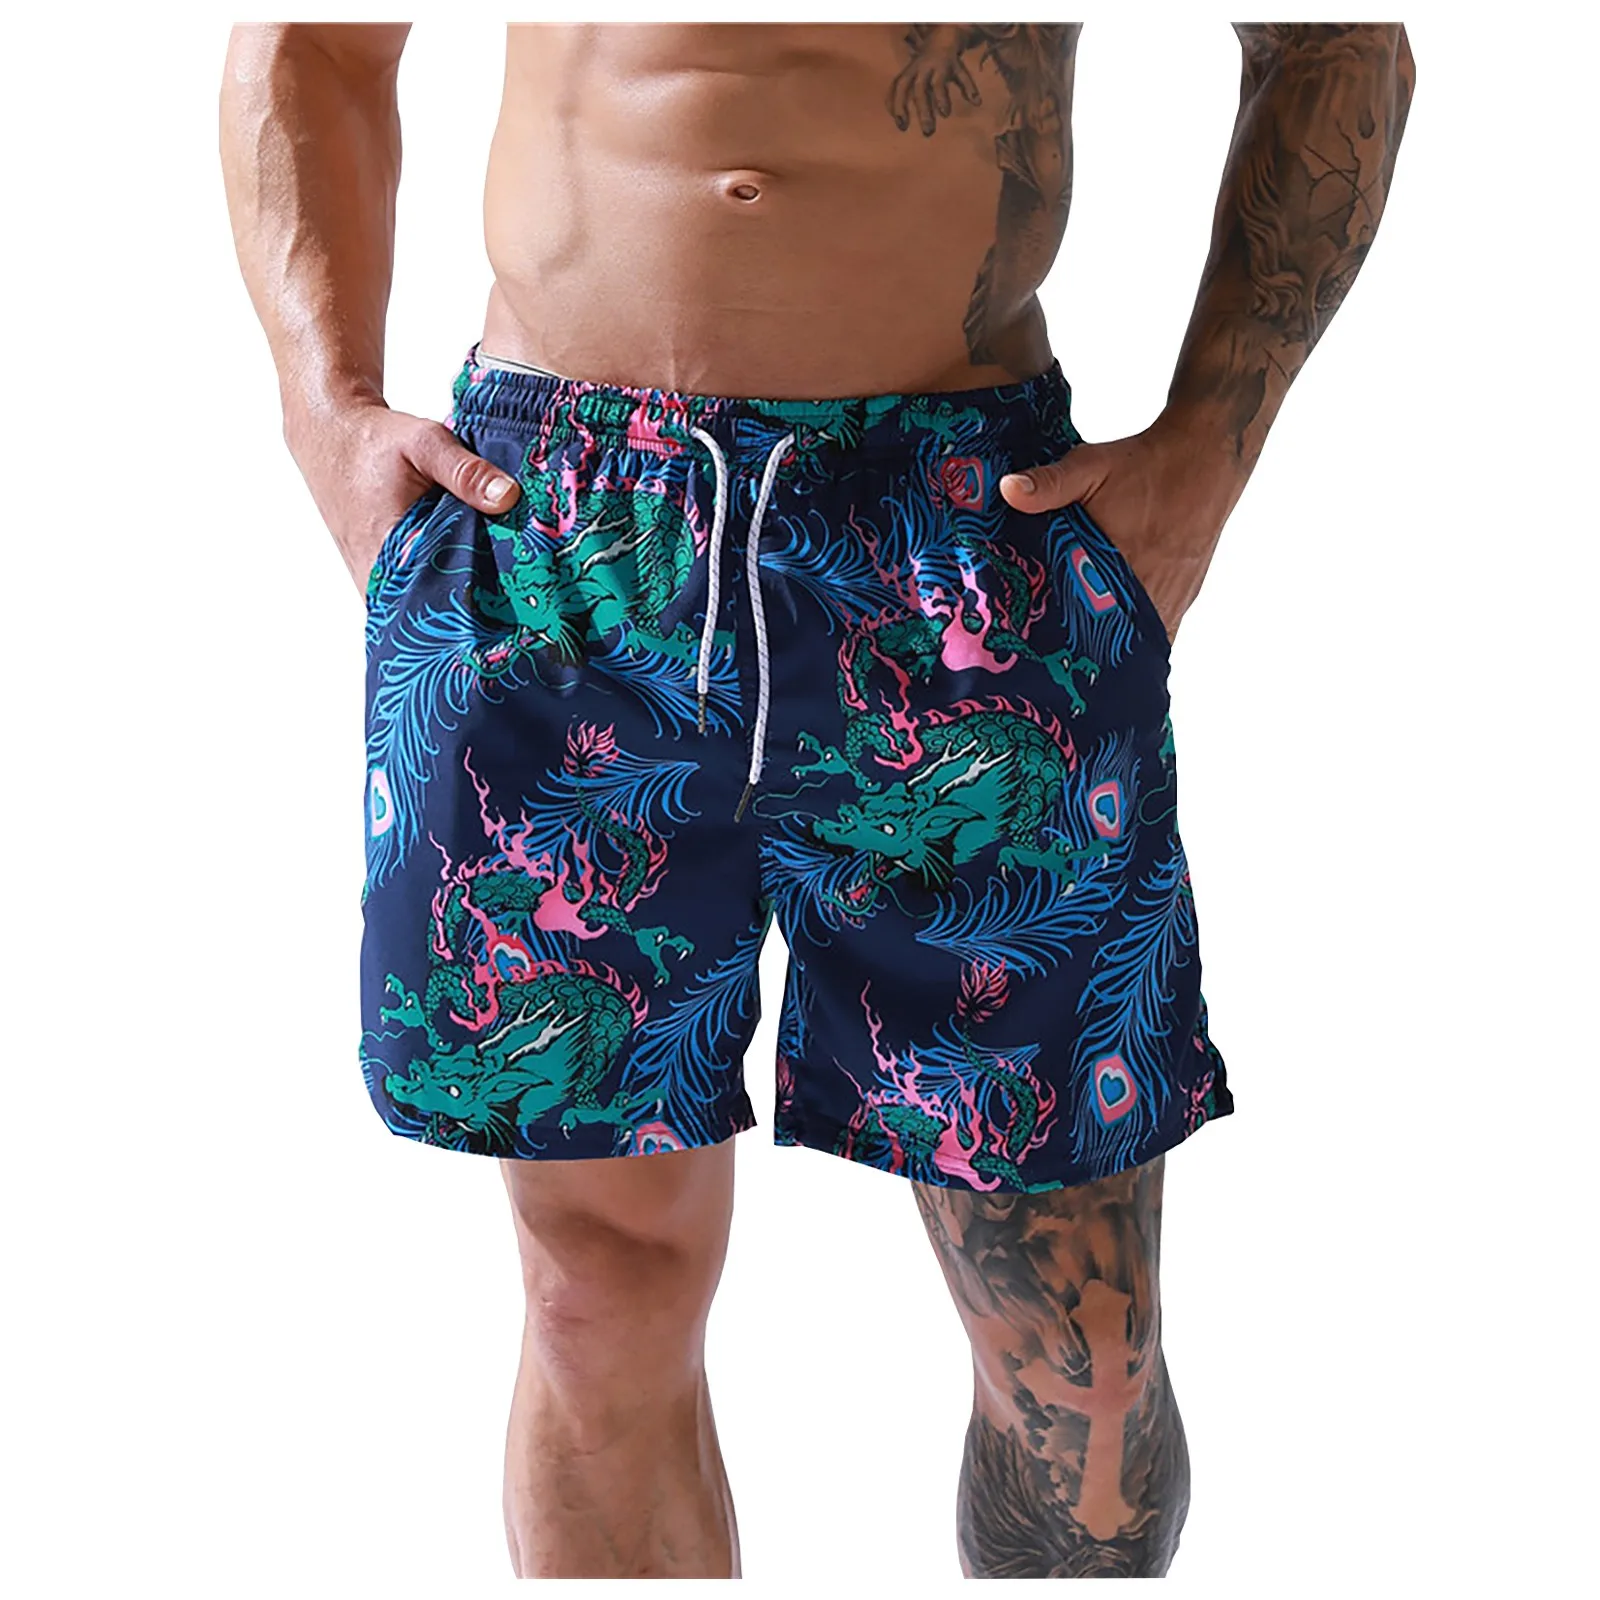 Fxbar,Plus Size Men Breathable Trunks Pants Solid Swimwear Beach Shorts Quick Dry Trousers Short 